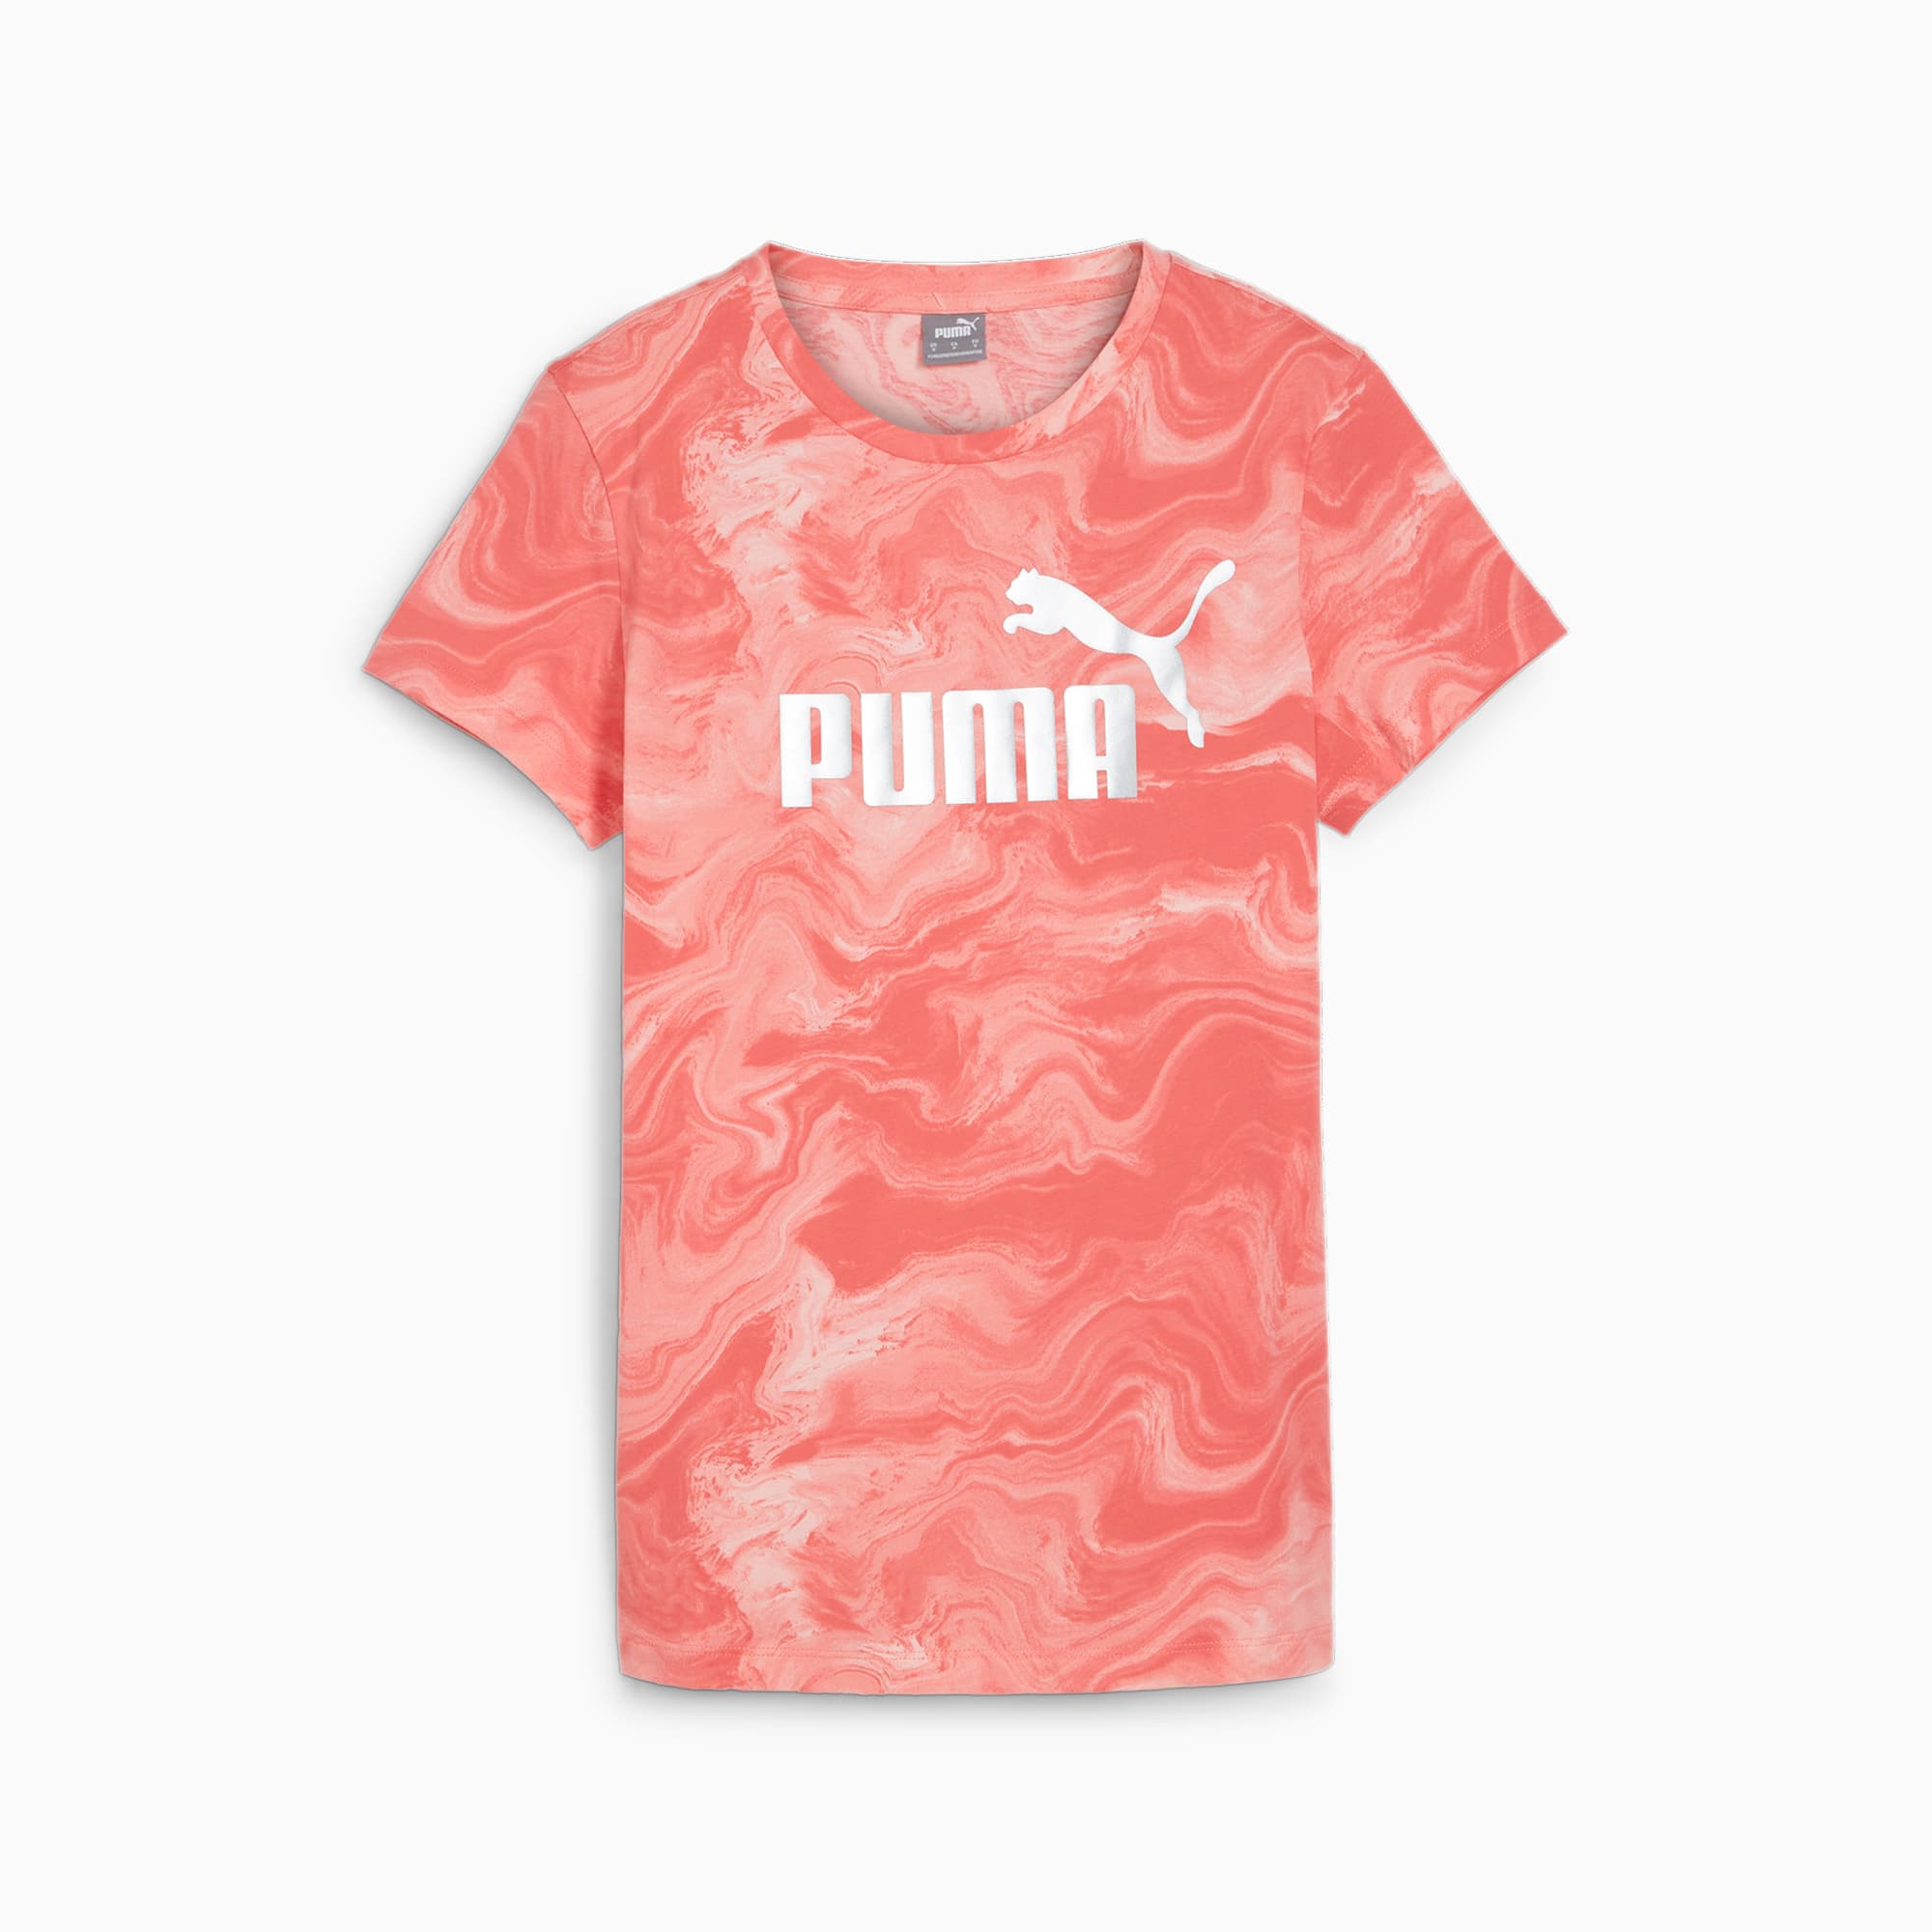 PUMA Ess+ Marbleized Women's T-Shirt, Peach Smoothie, Size L, Clothing